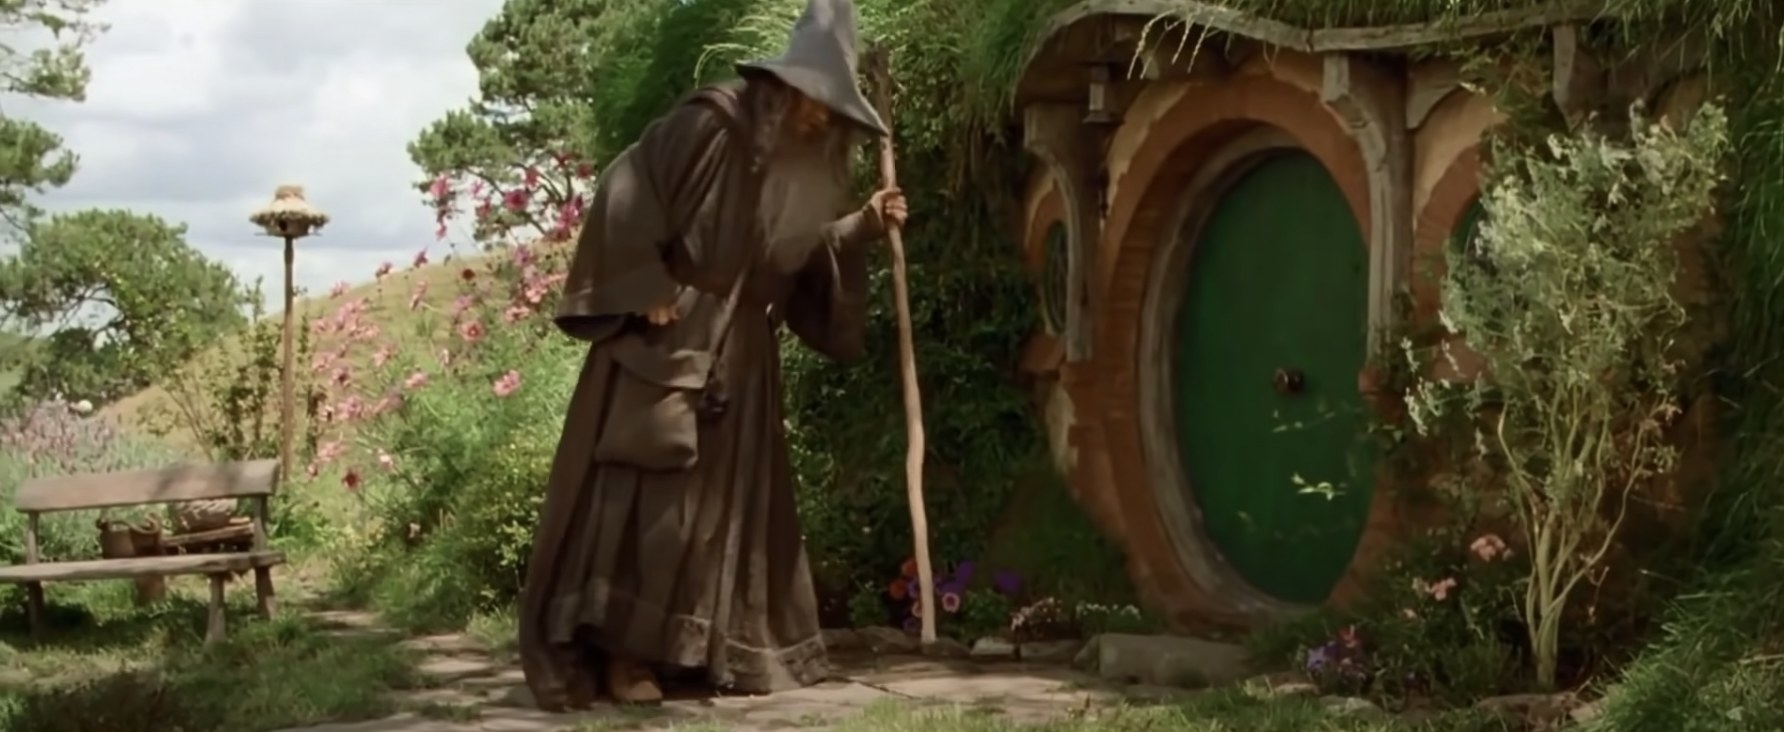 Gandalf at a hobbit door